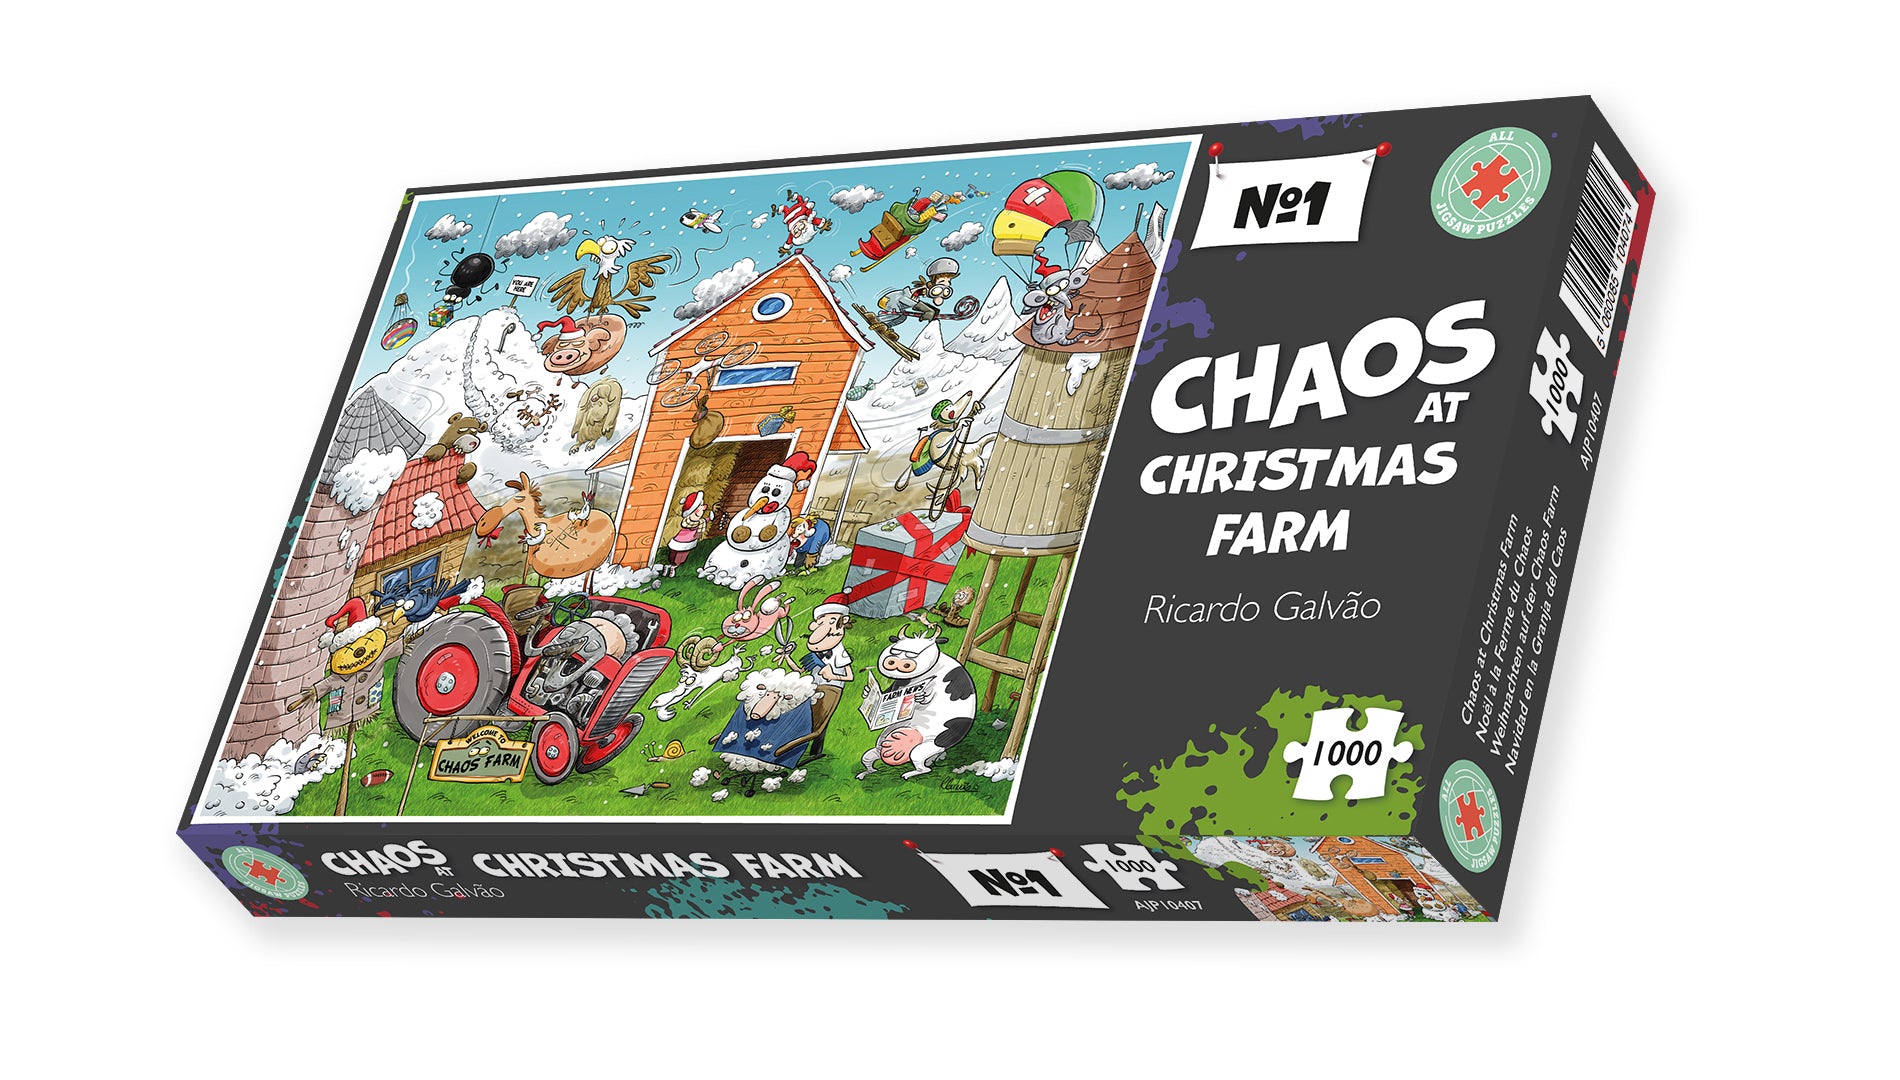 Christmas at Chaos Farm - No.1 1000 Piece Jigsaw Puzzle